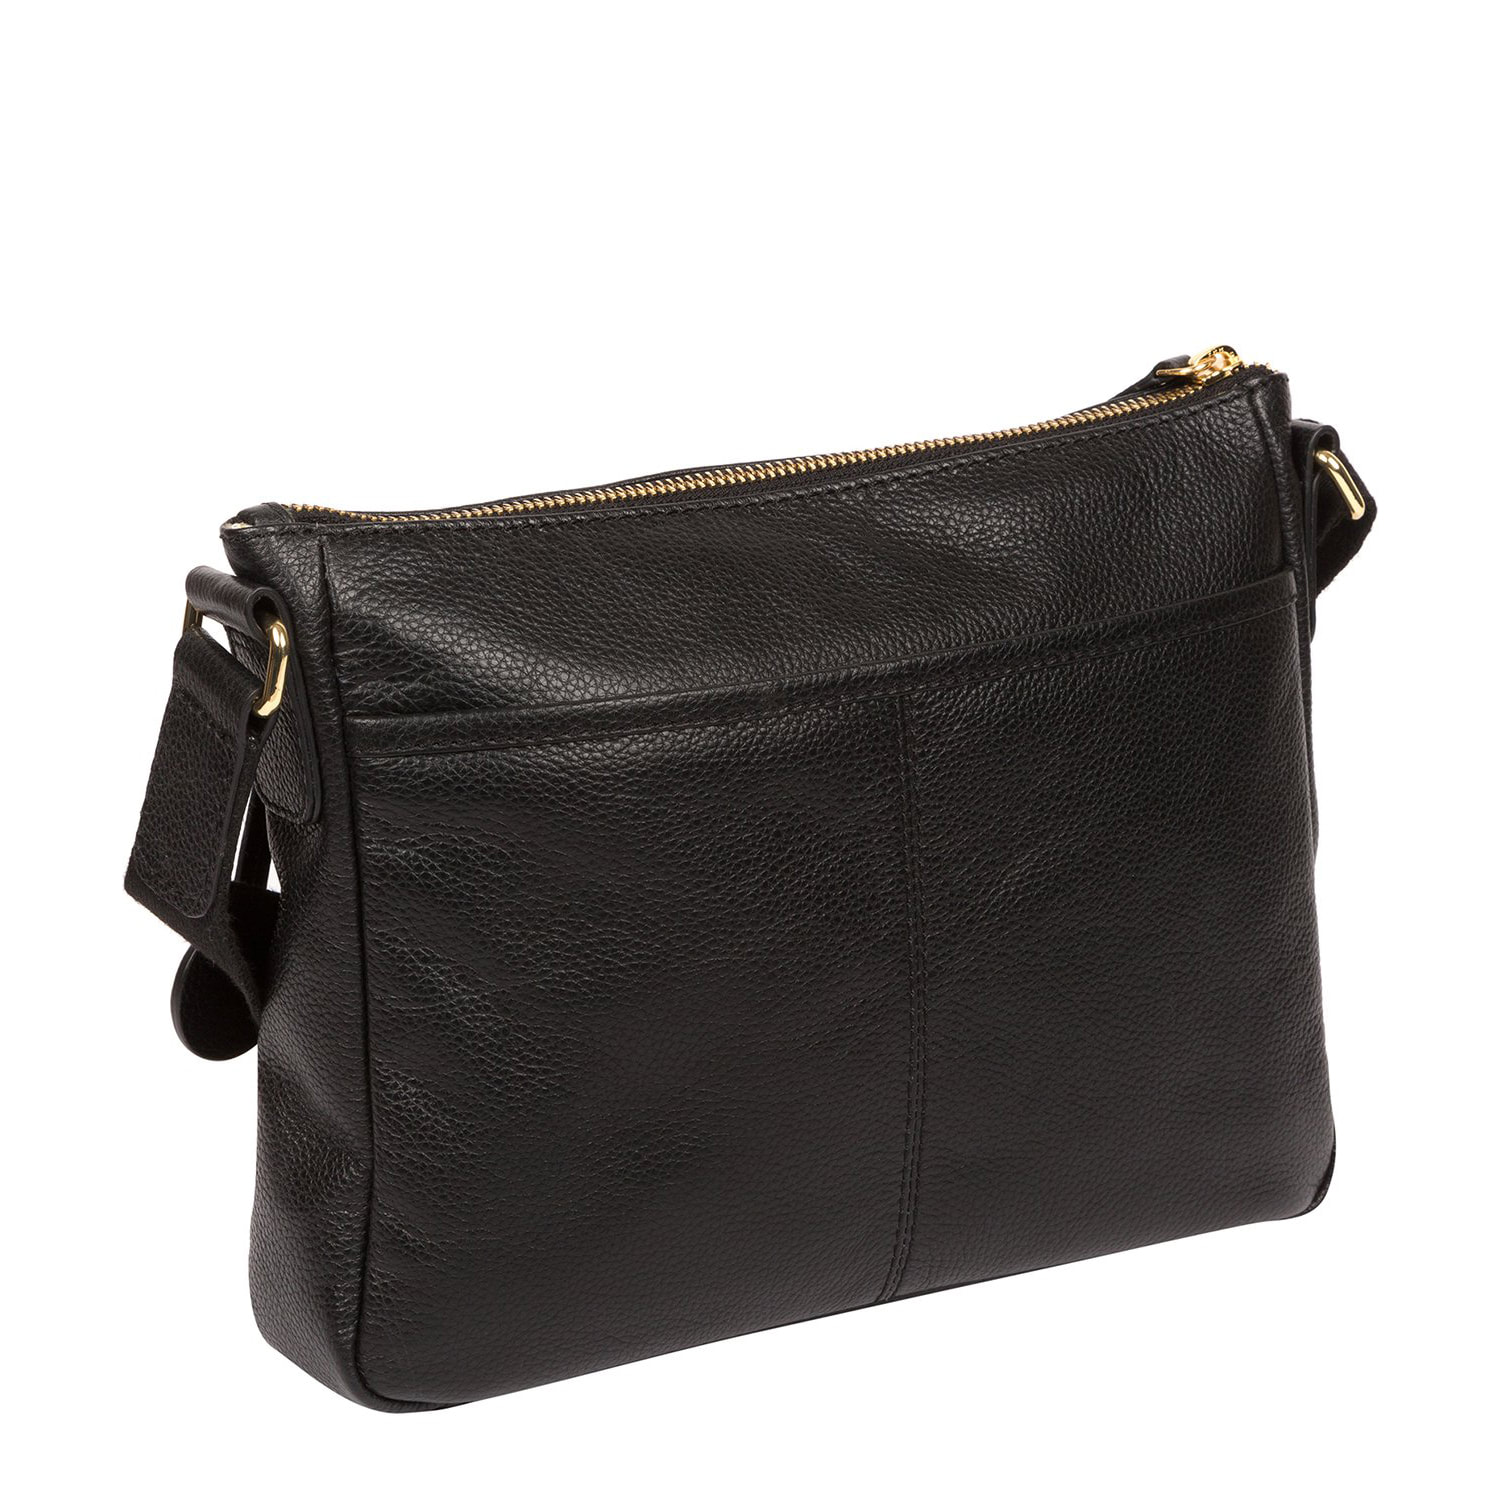 Small Black Leather Shoulder Bag, Cross Body Bag